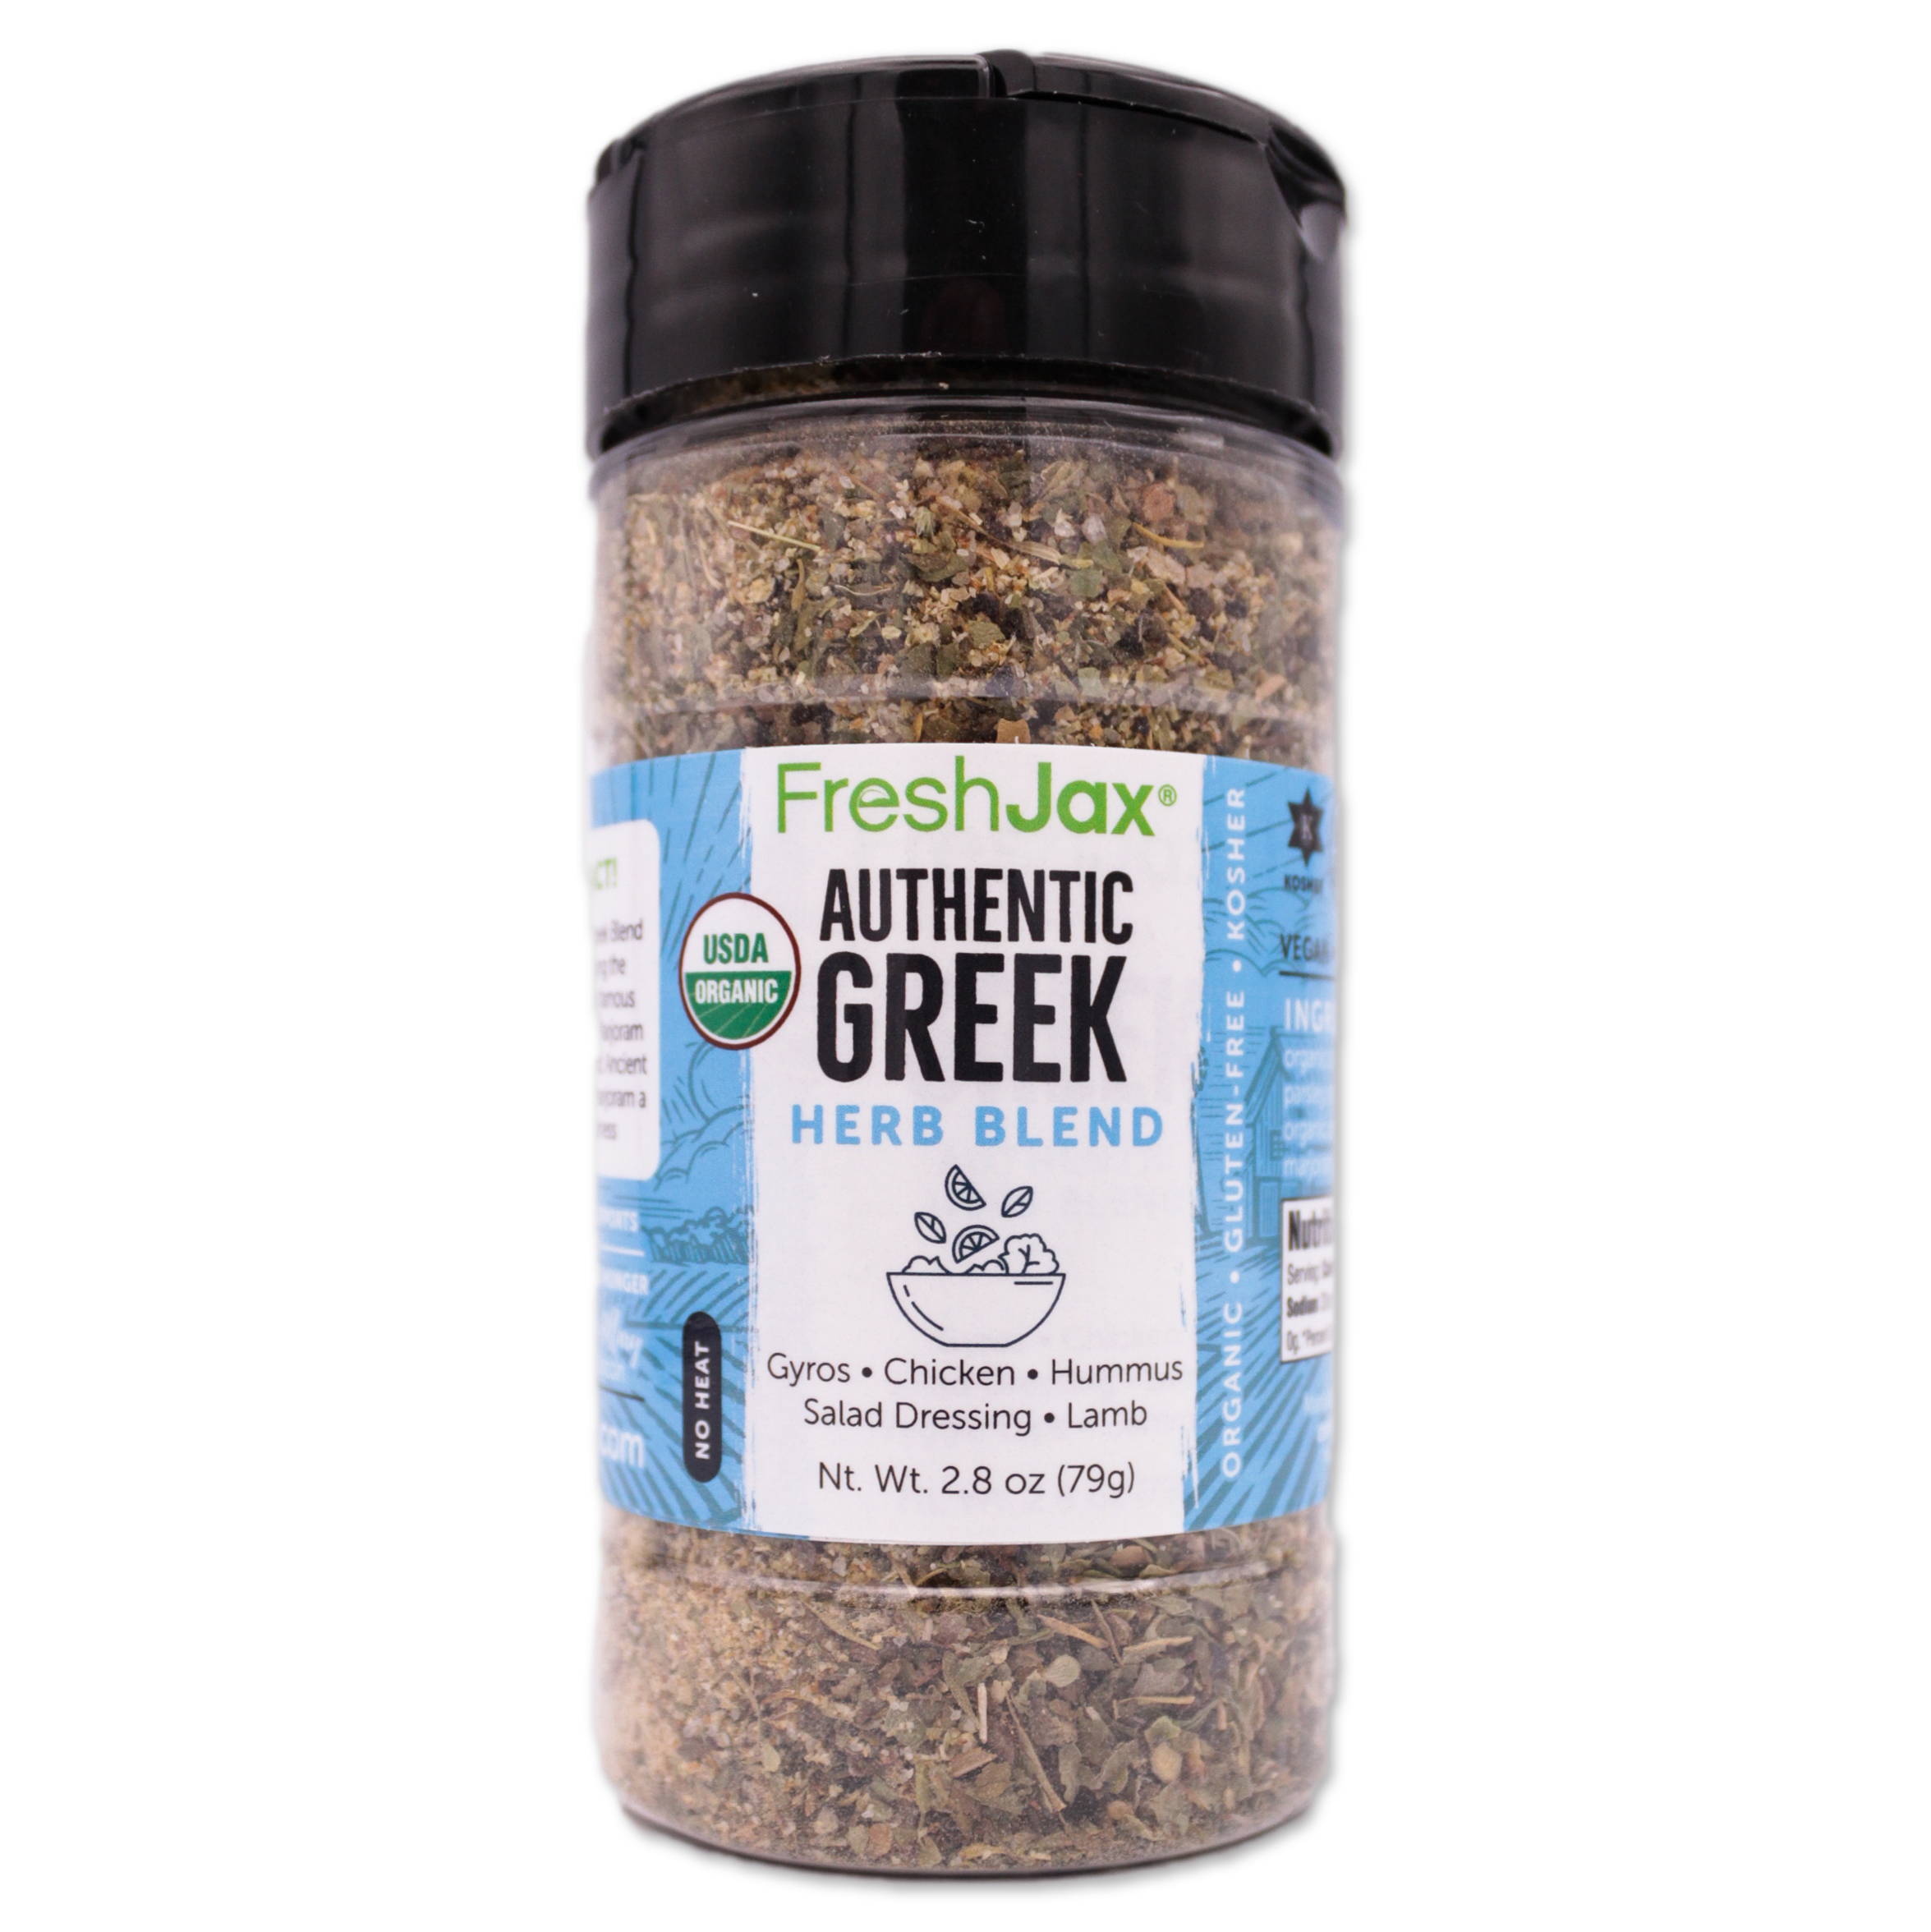 FreshJax Organic Spices Authentic Greek Herb Blend large bottle